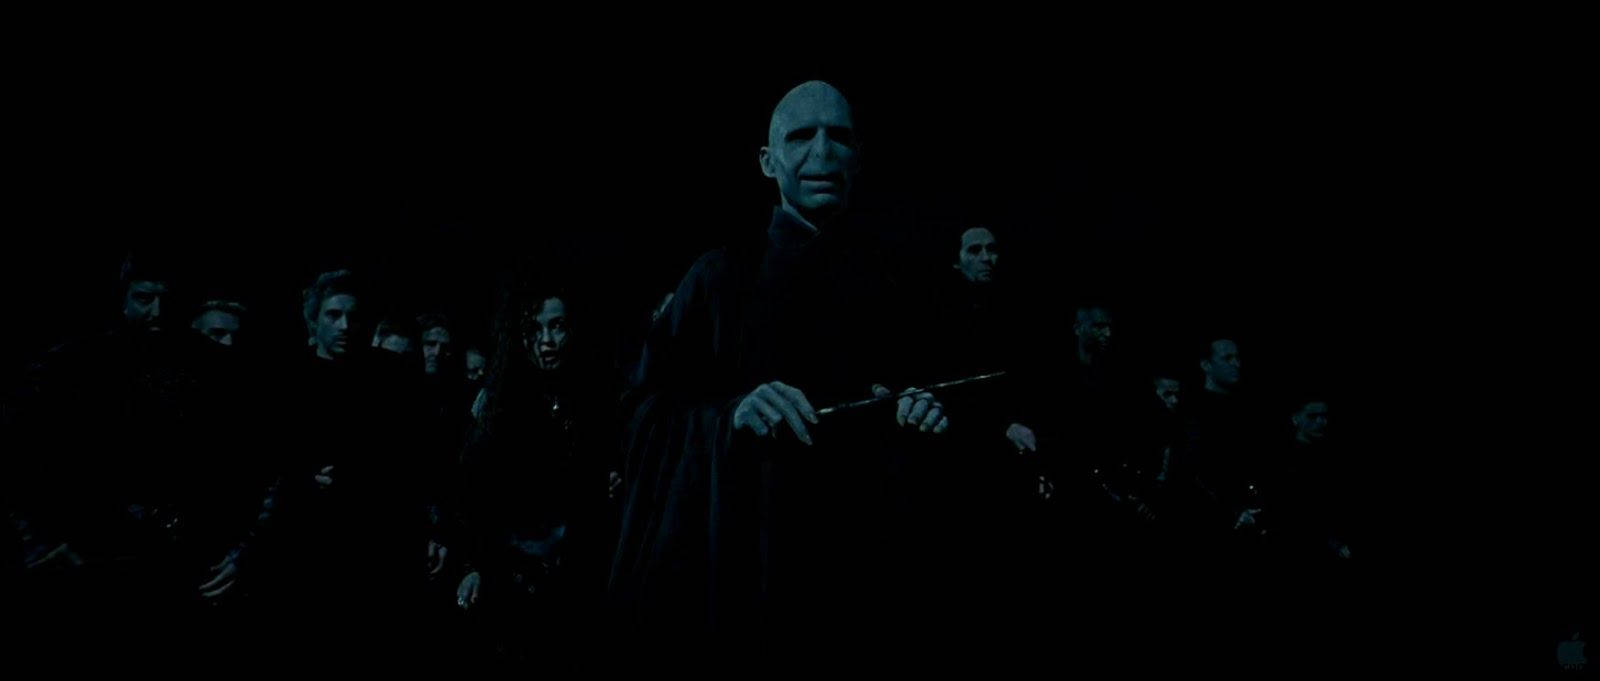 Lord Voldemort Evil Wizards Wallpaper